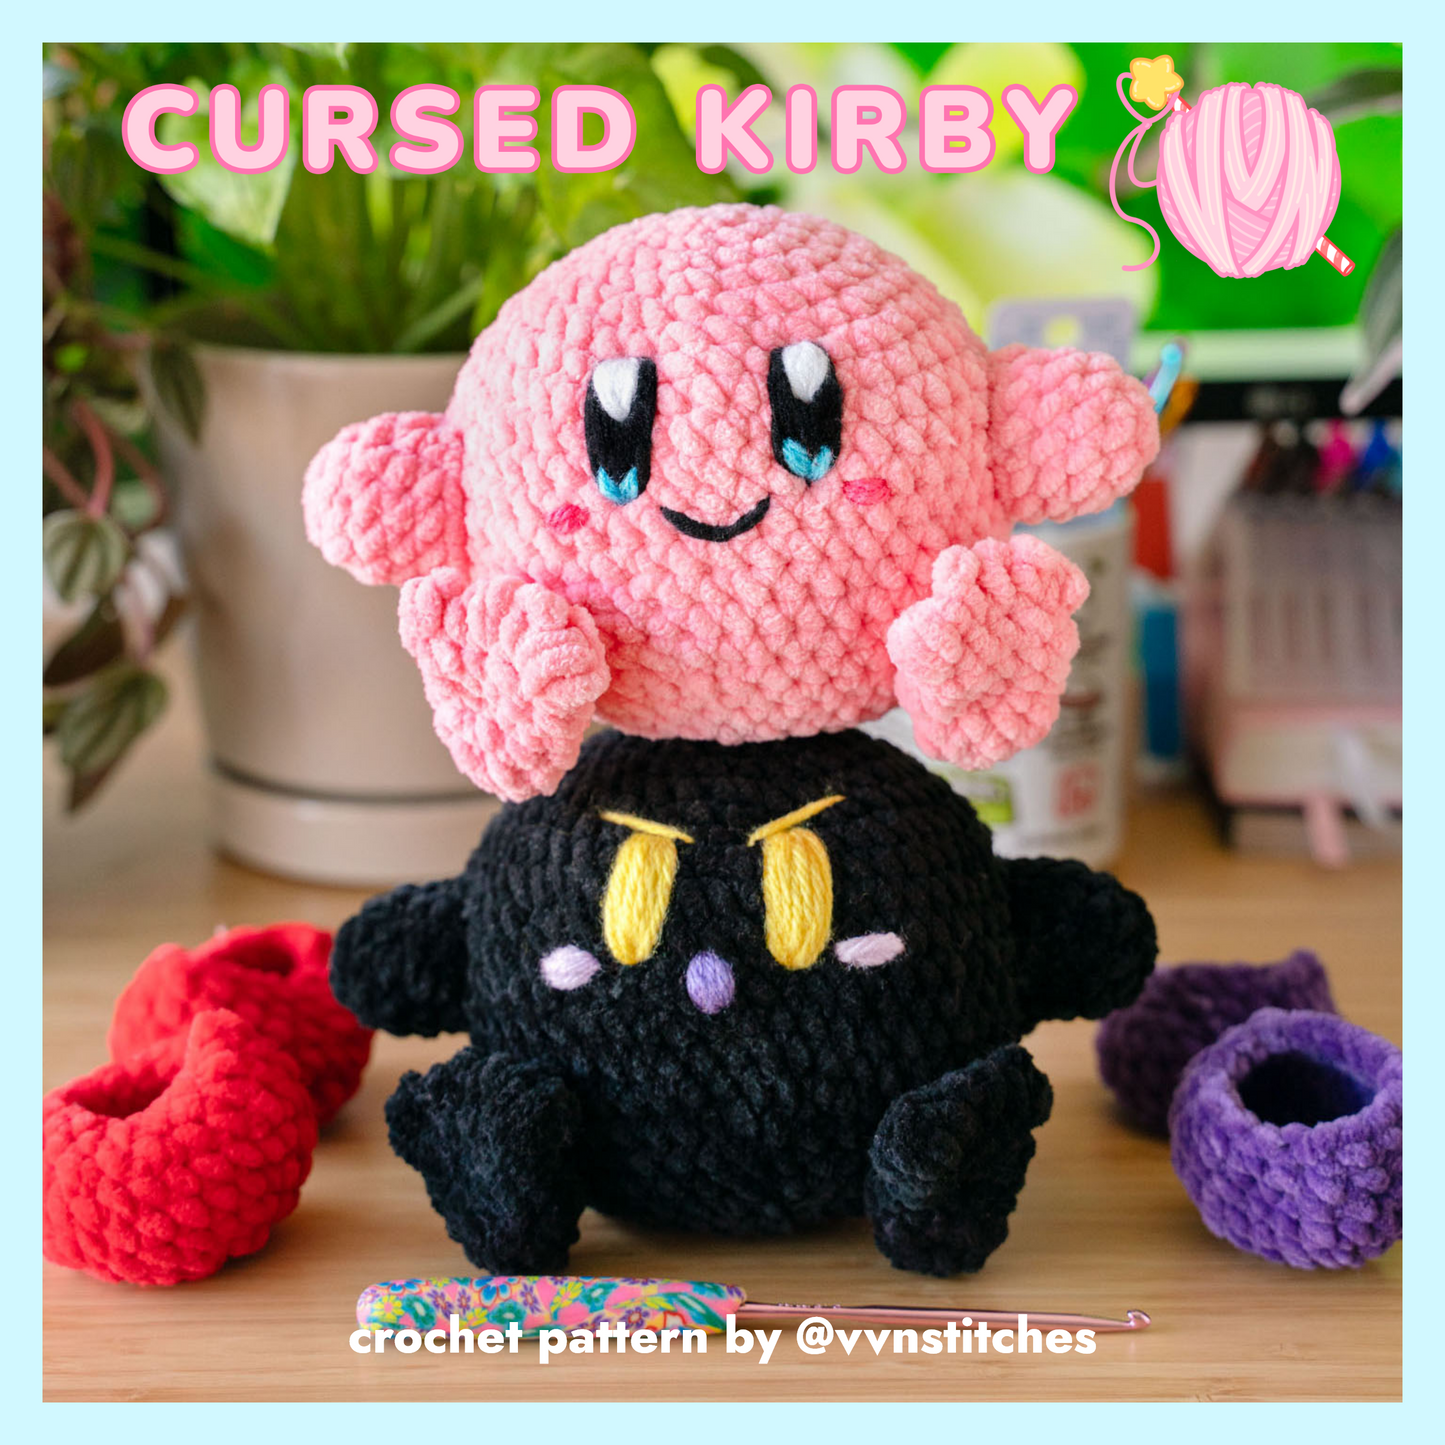 cursed kirby crochet pattern feet amigurumi cute plushie nintendo meme pop culture video games